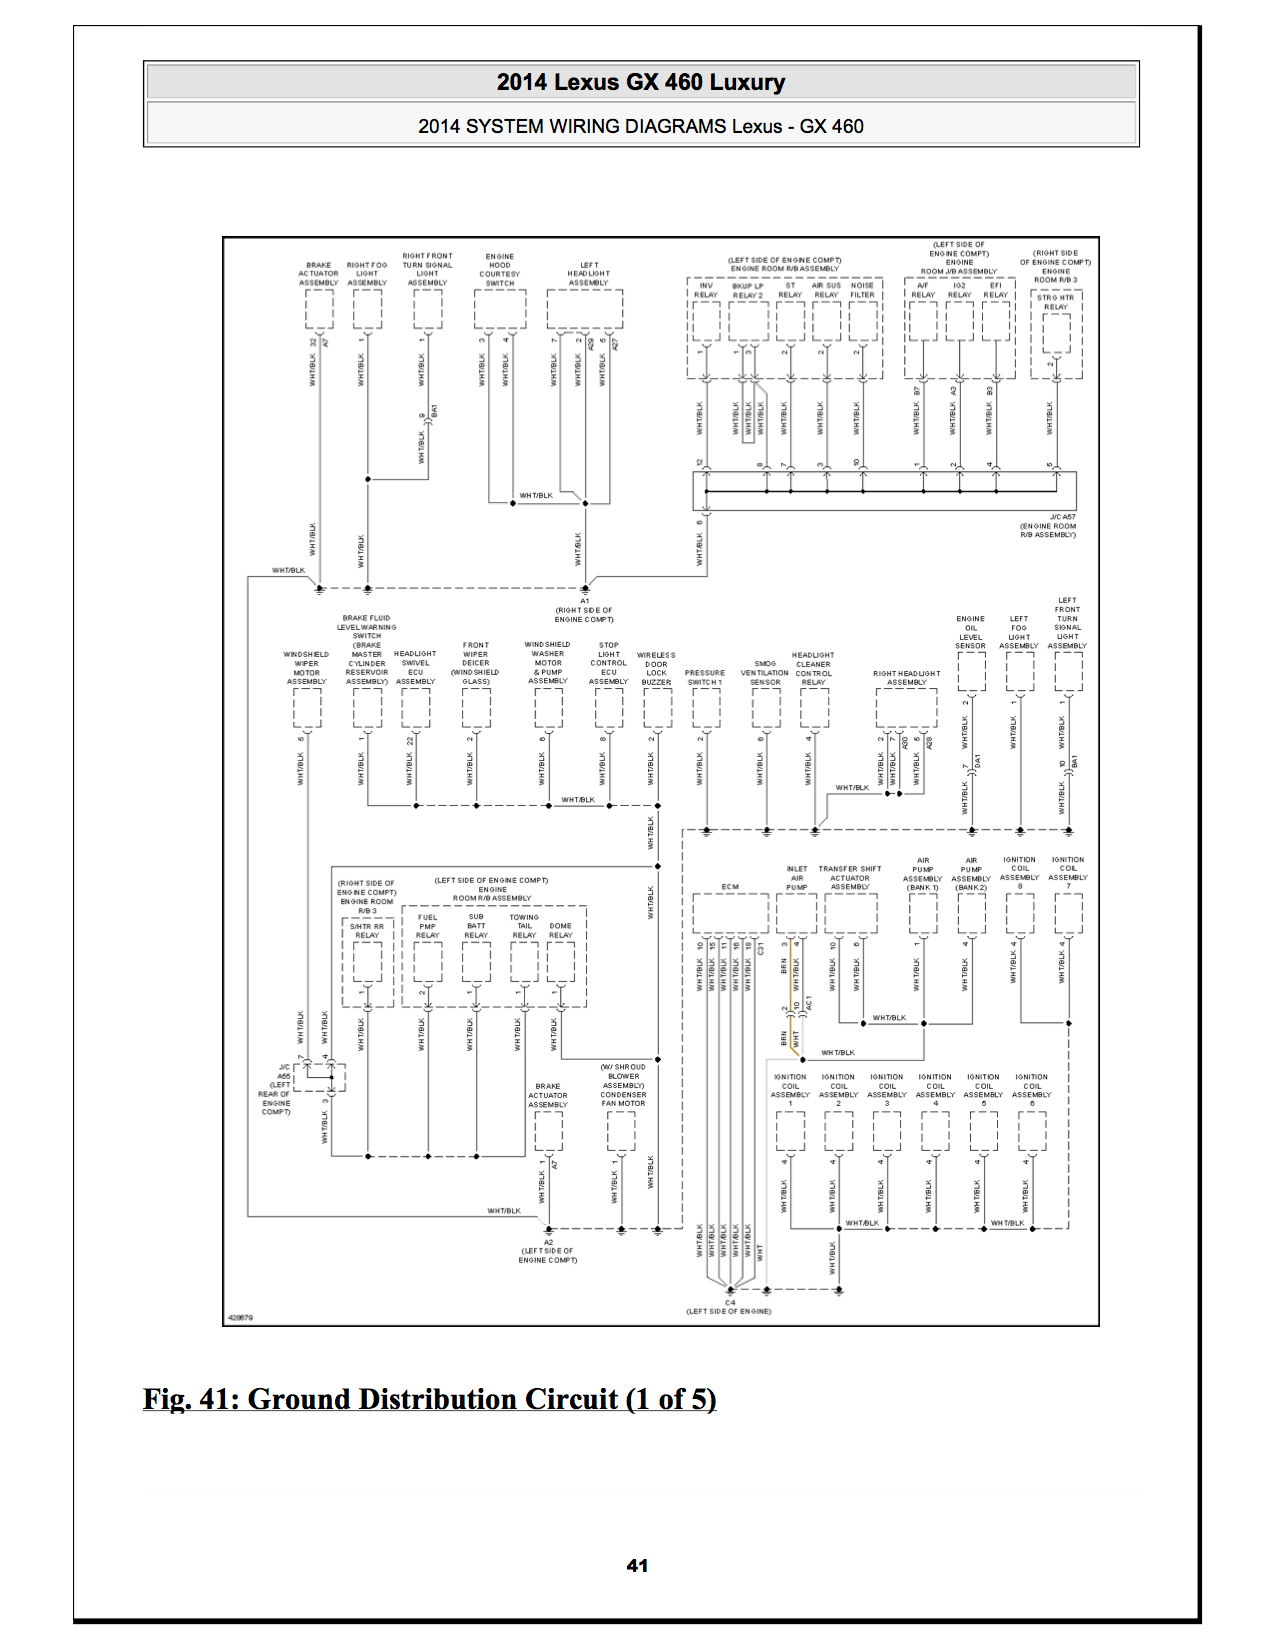 2003 Chevy C4500 Drl Wiring Diagram